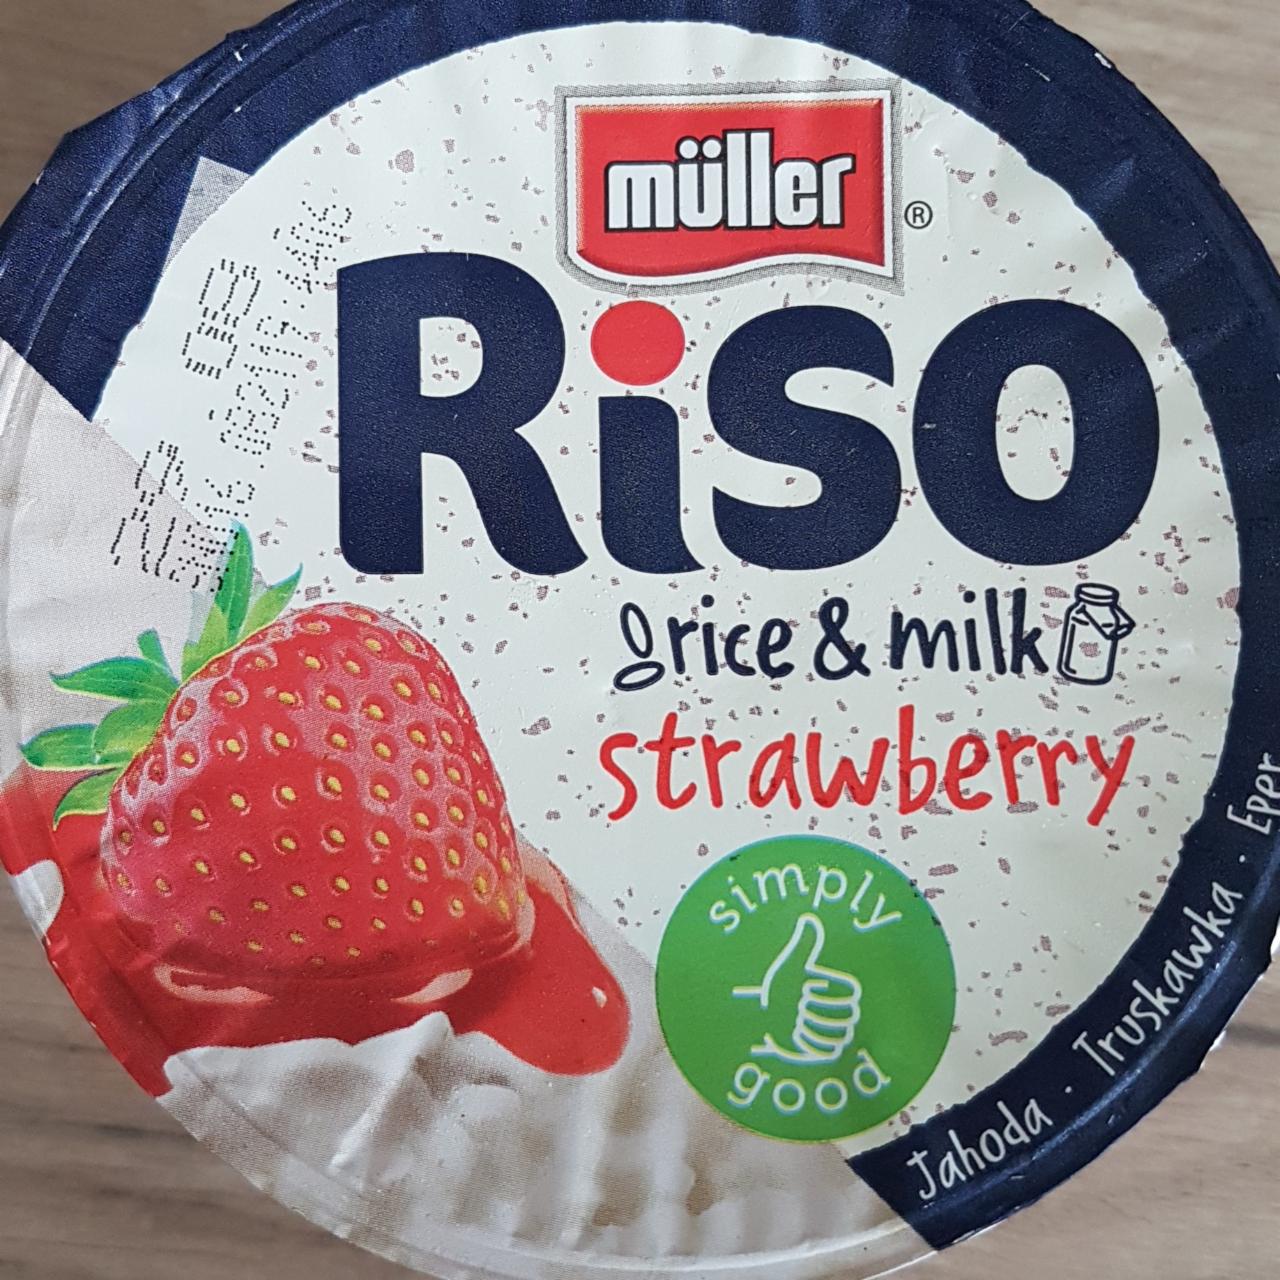 Képek - Riso rice & milk Strawberry Müller